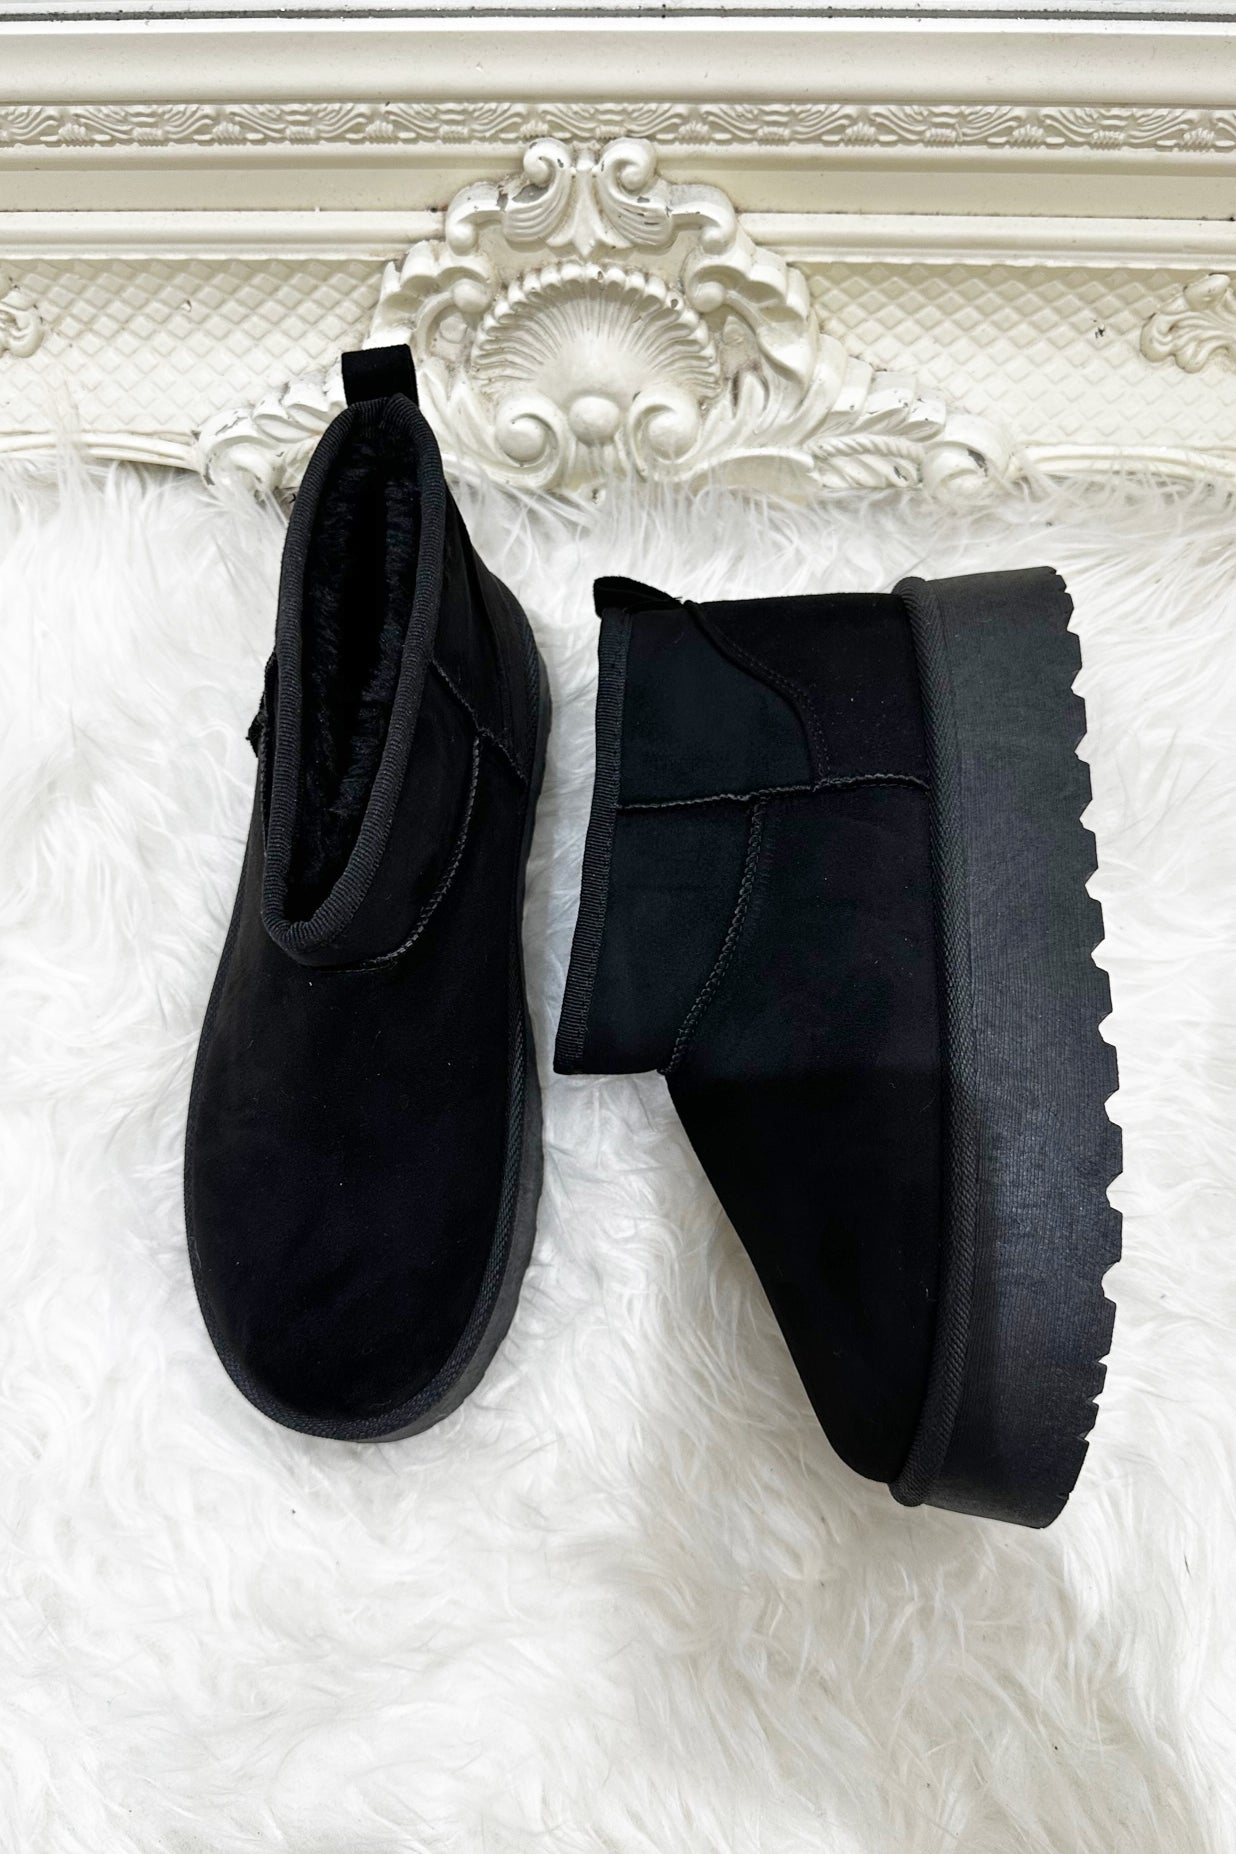 JYY Platform Boots - Black